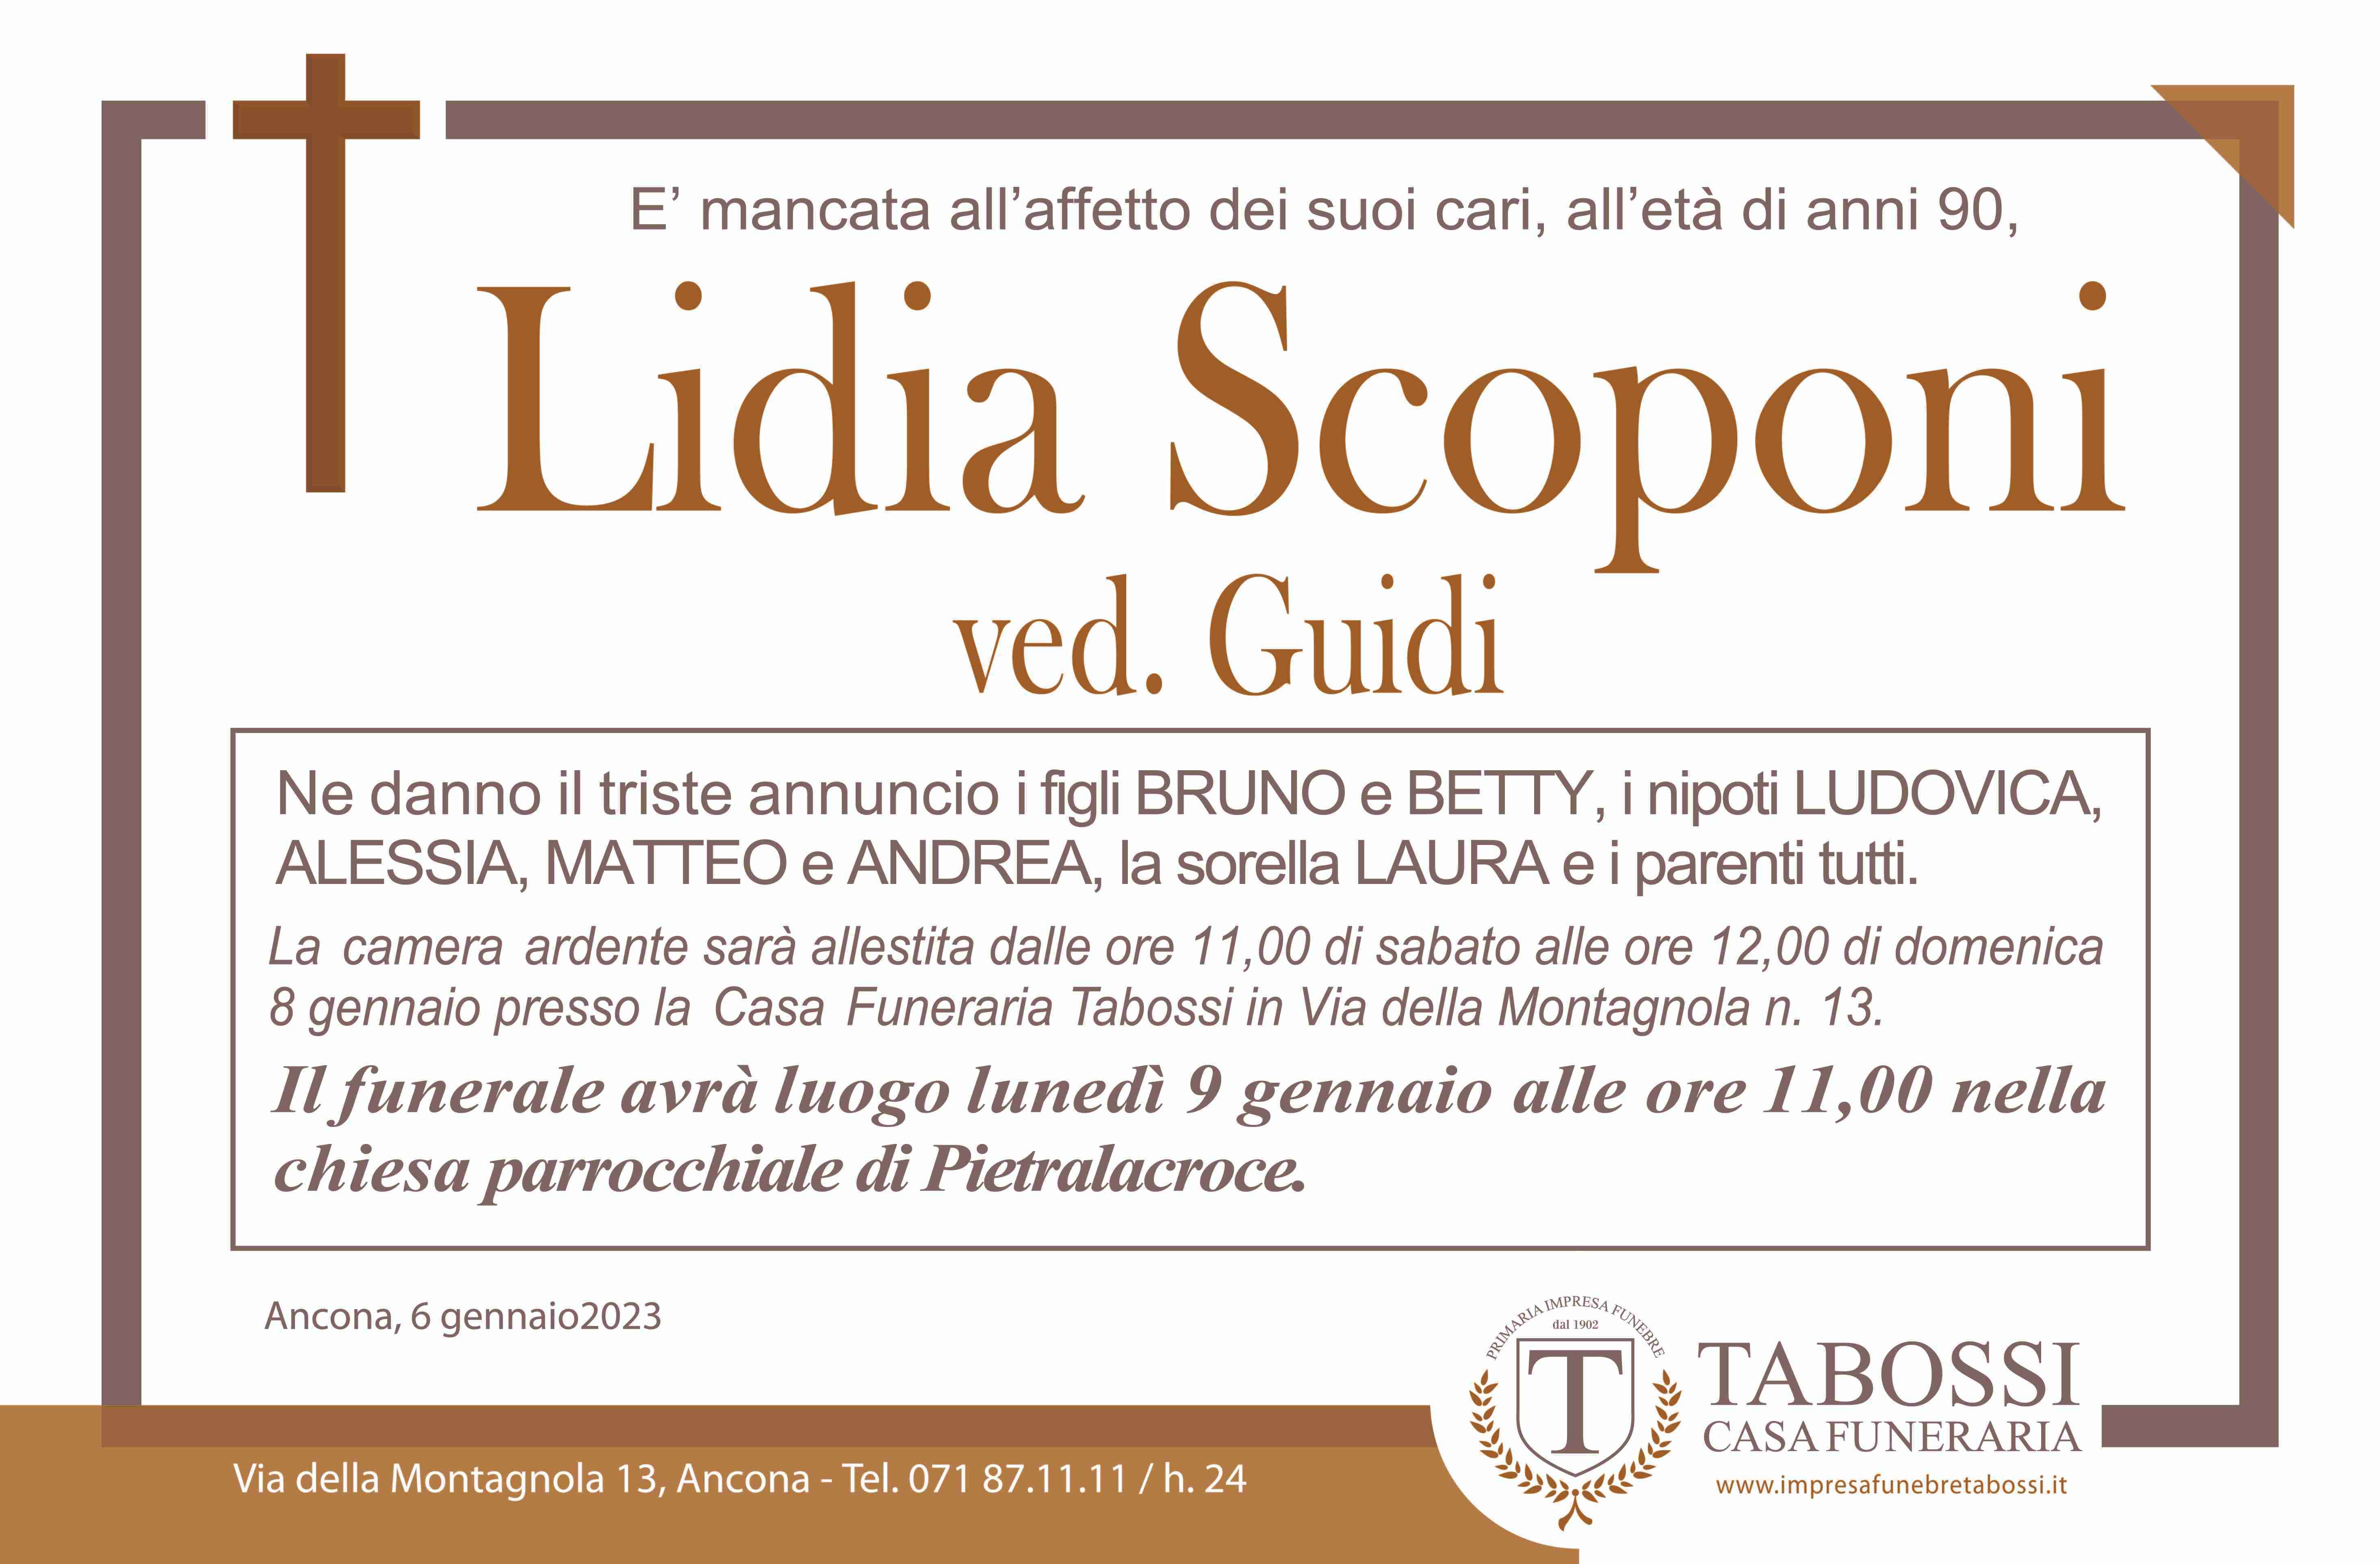 Lidia Scoponi